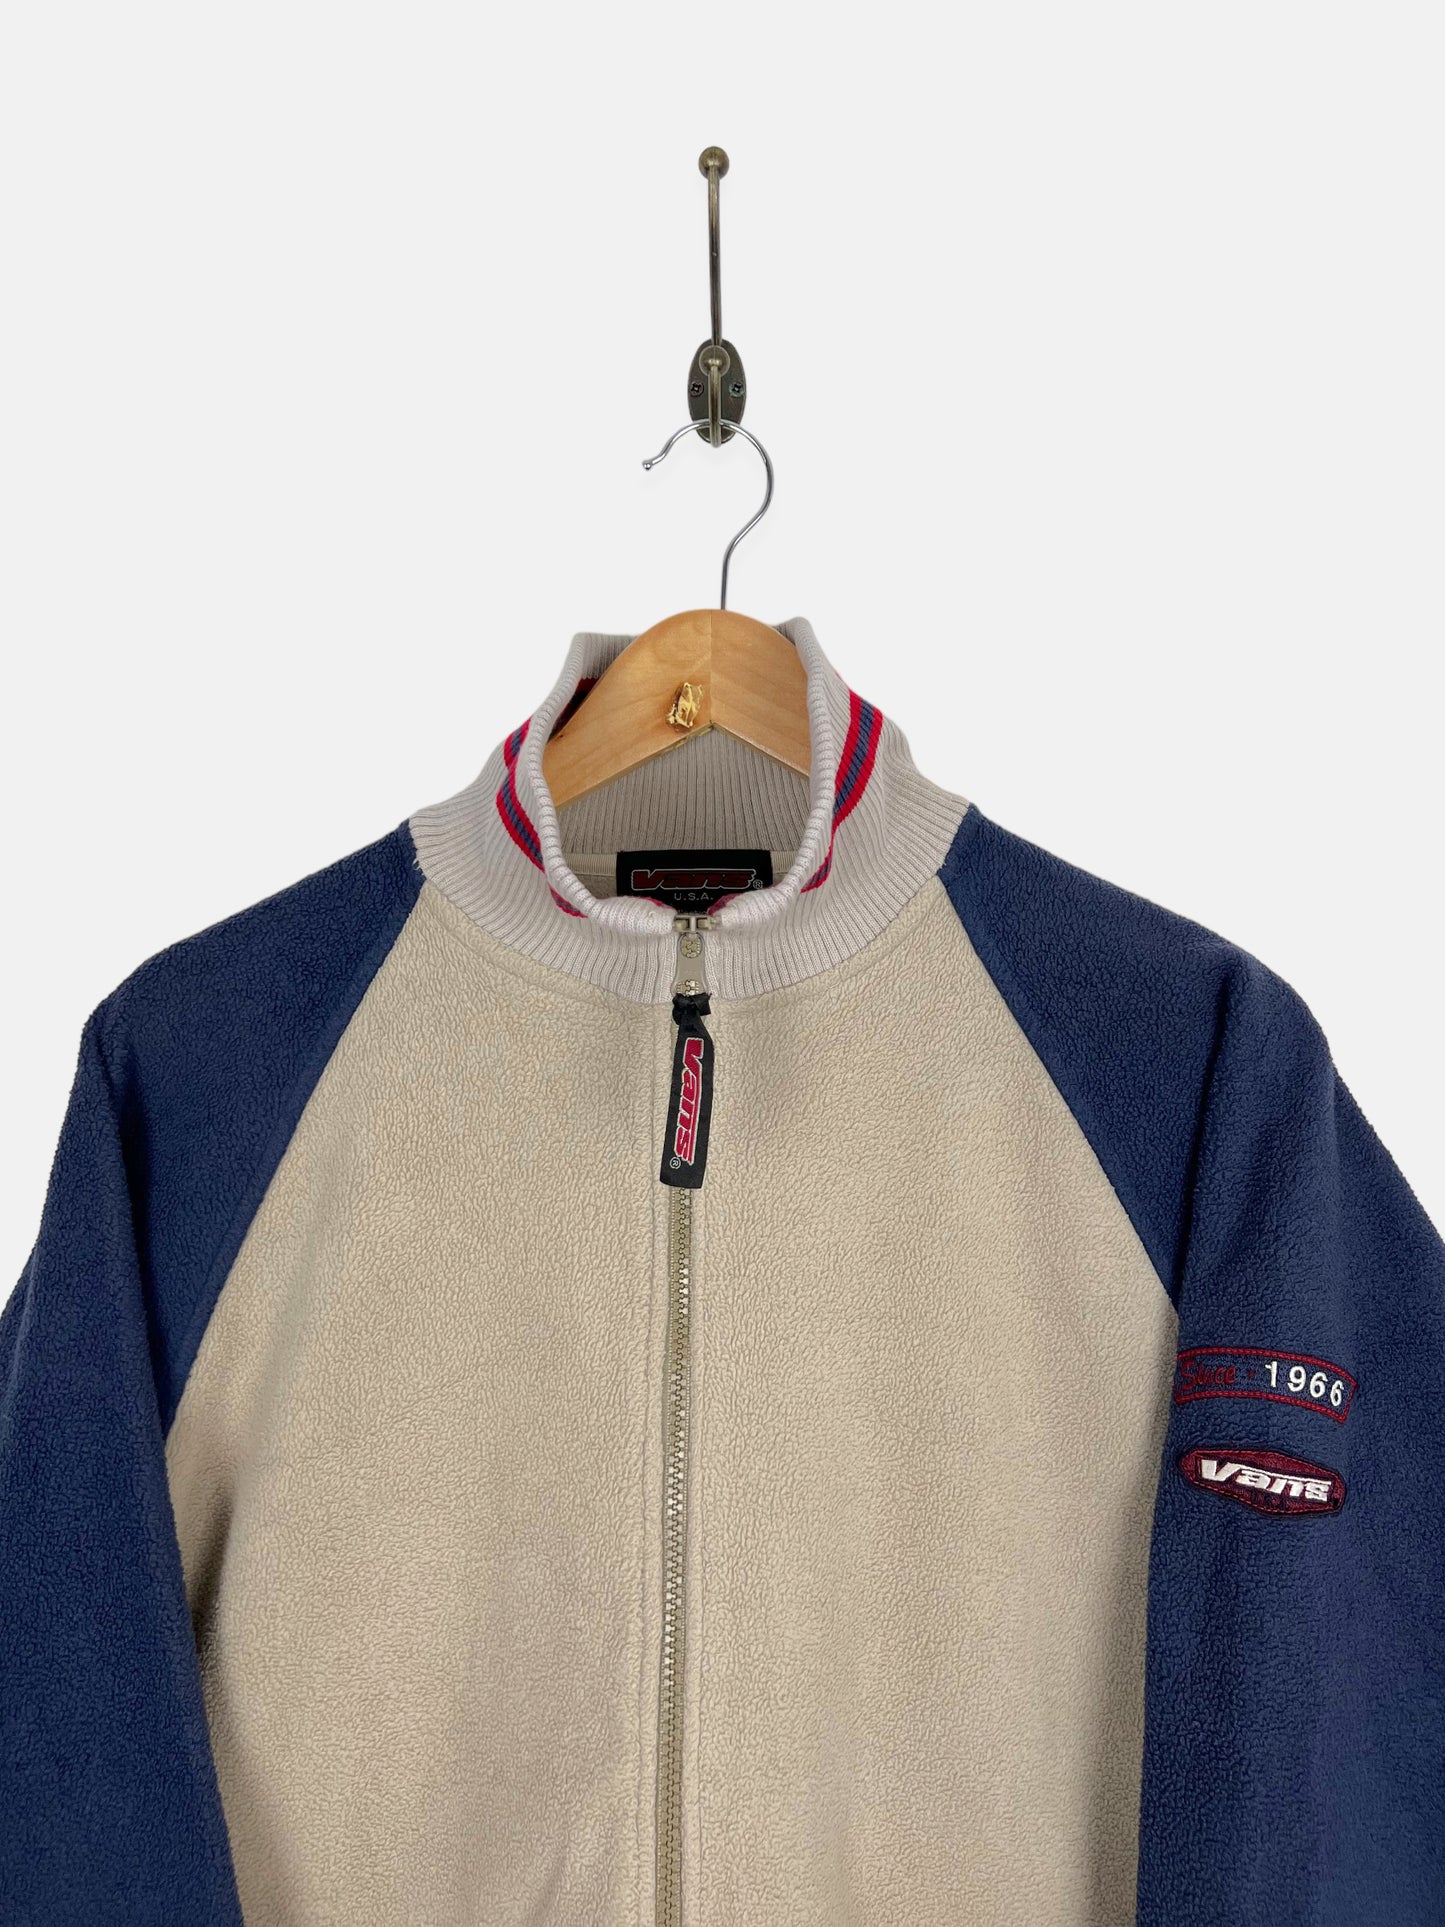 90's Vans USA Embroidered Vintage Zip-Up Fleece/Jacket Size M-L